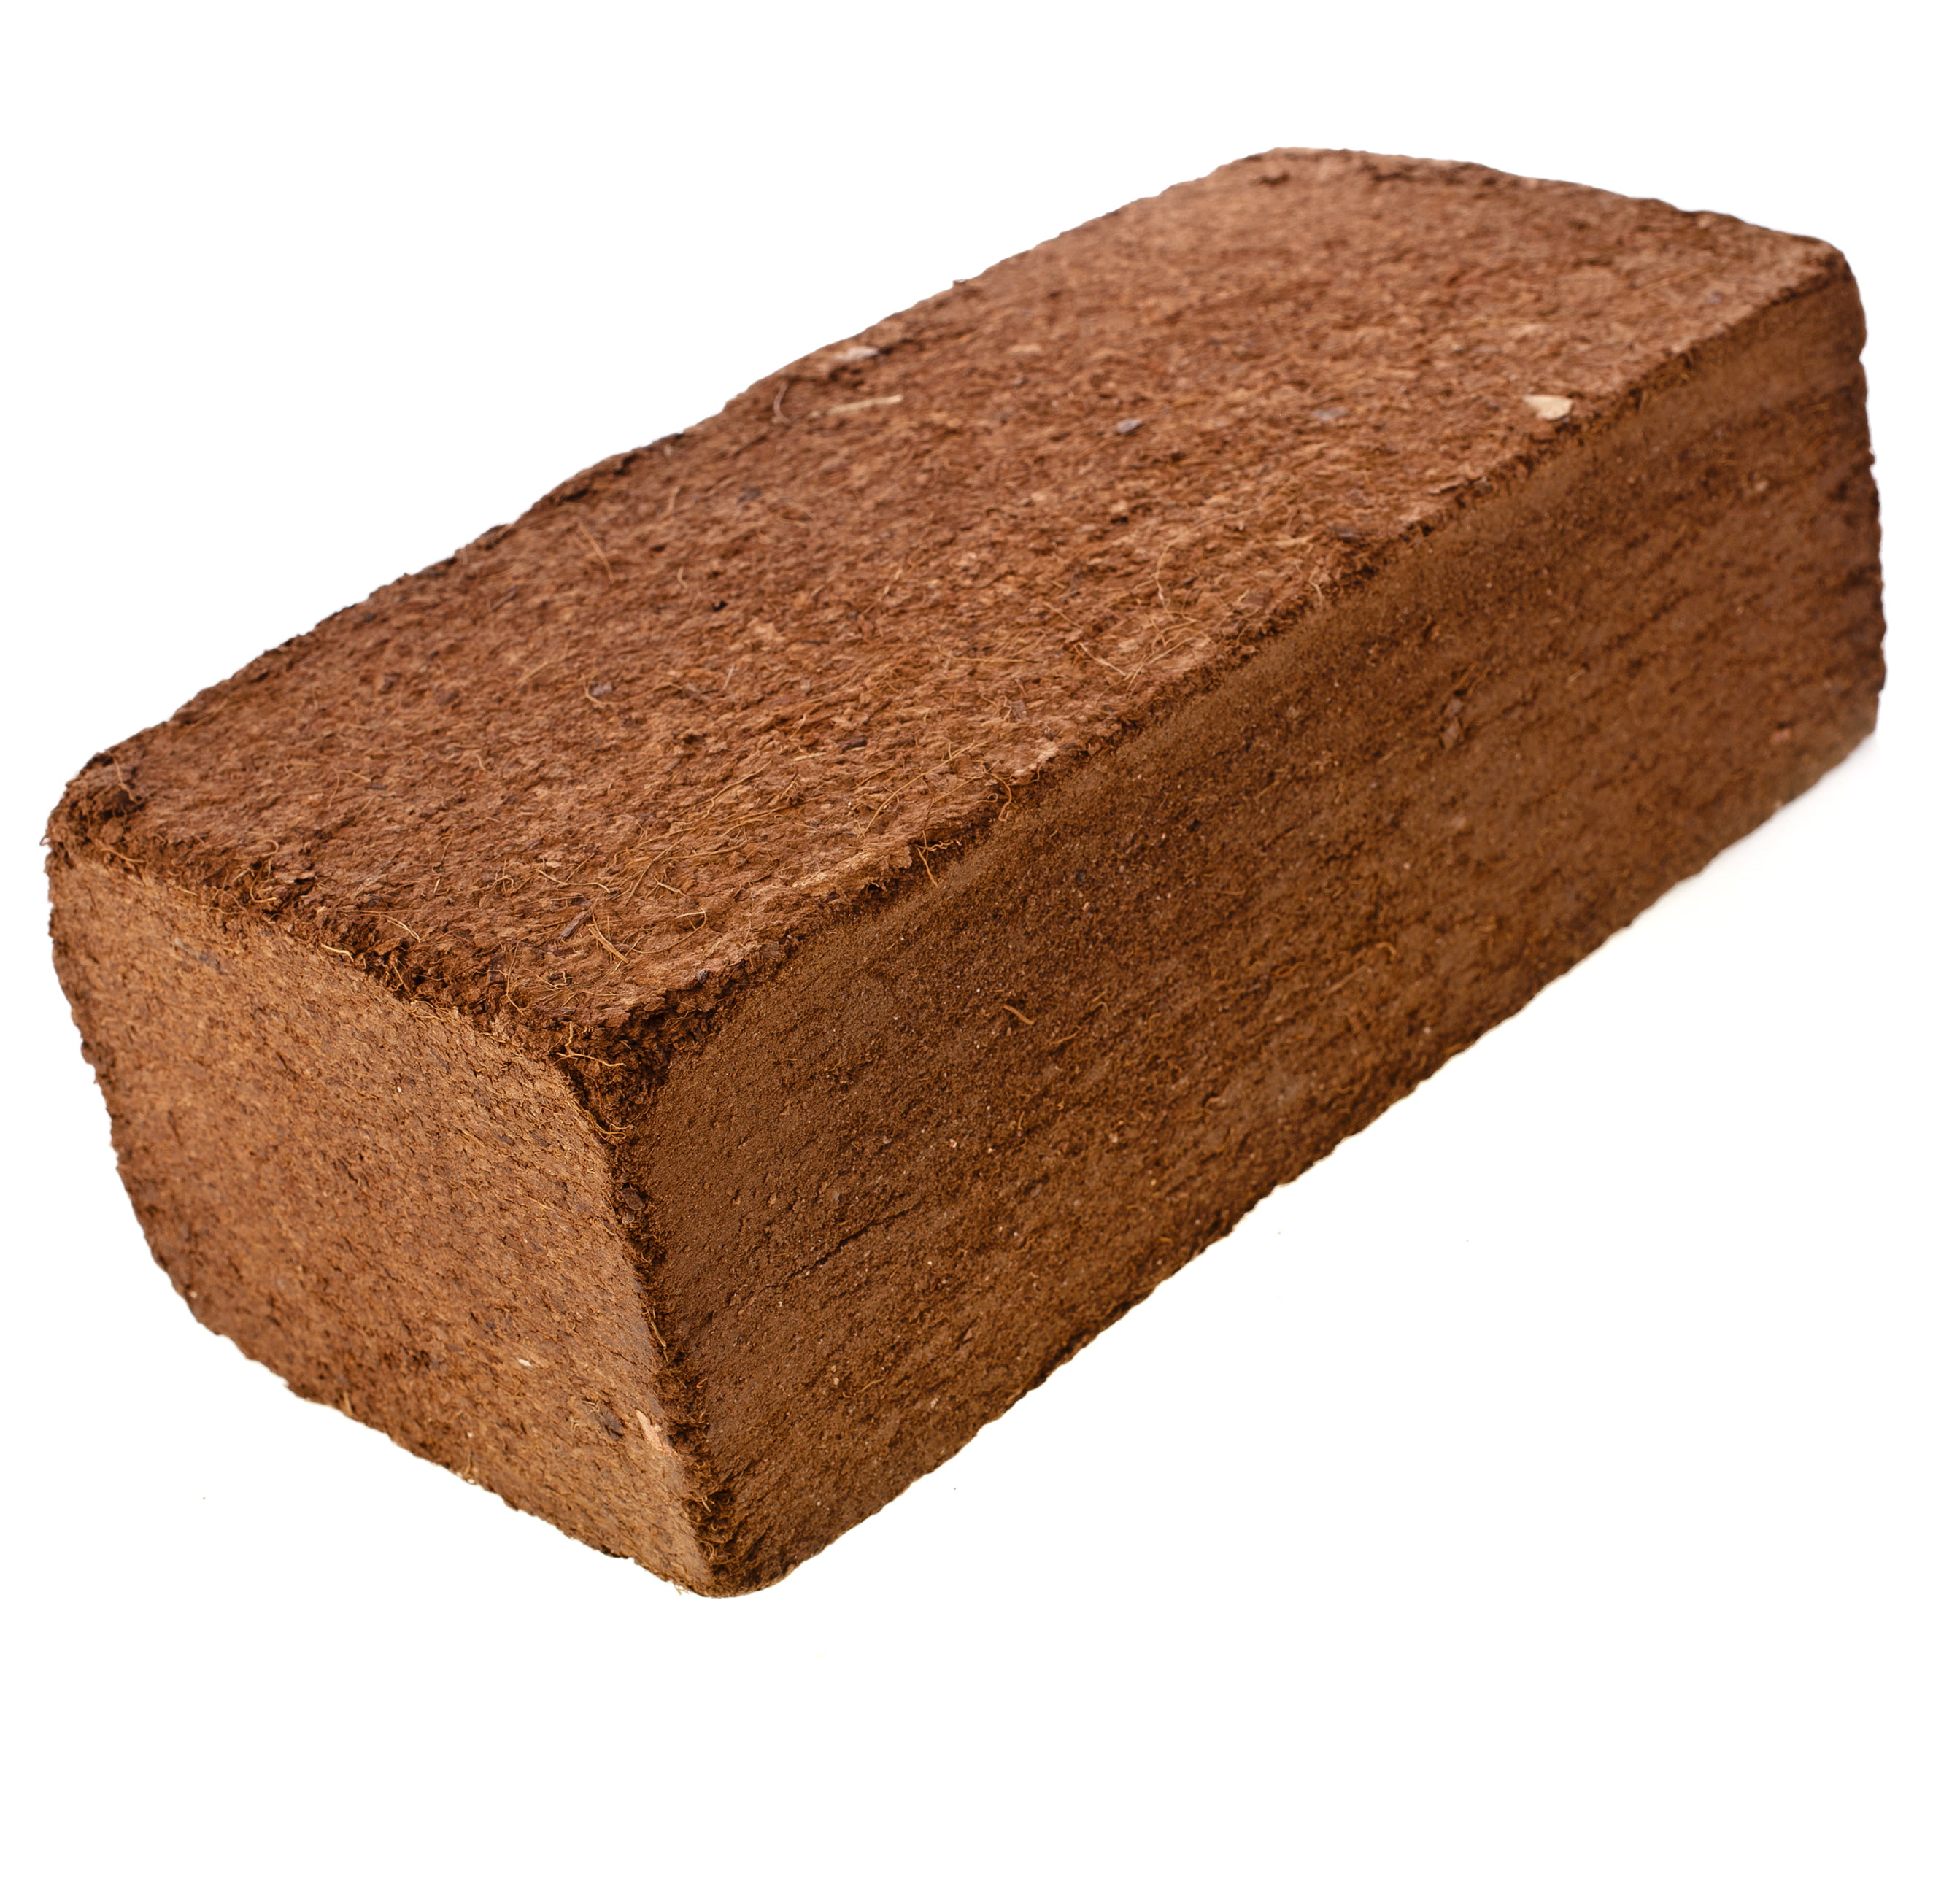 10 Bricks OMRI Listed for Organic Use Coco Bliss Premium Coco Coir Brick 250g 